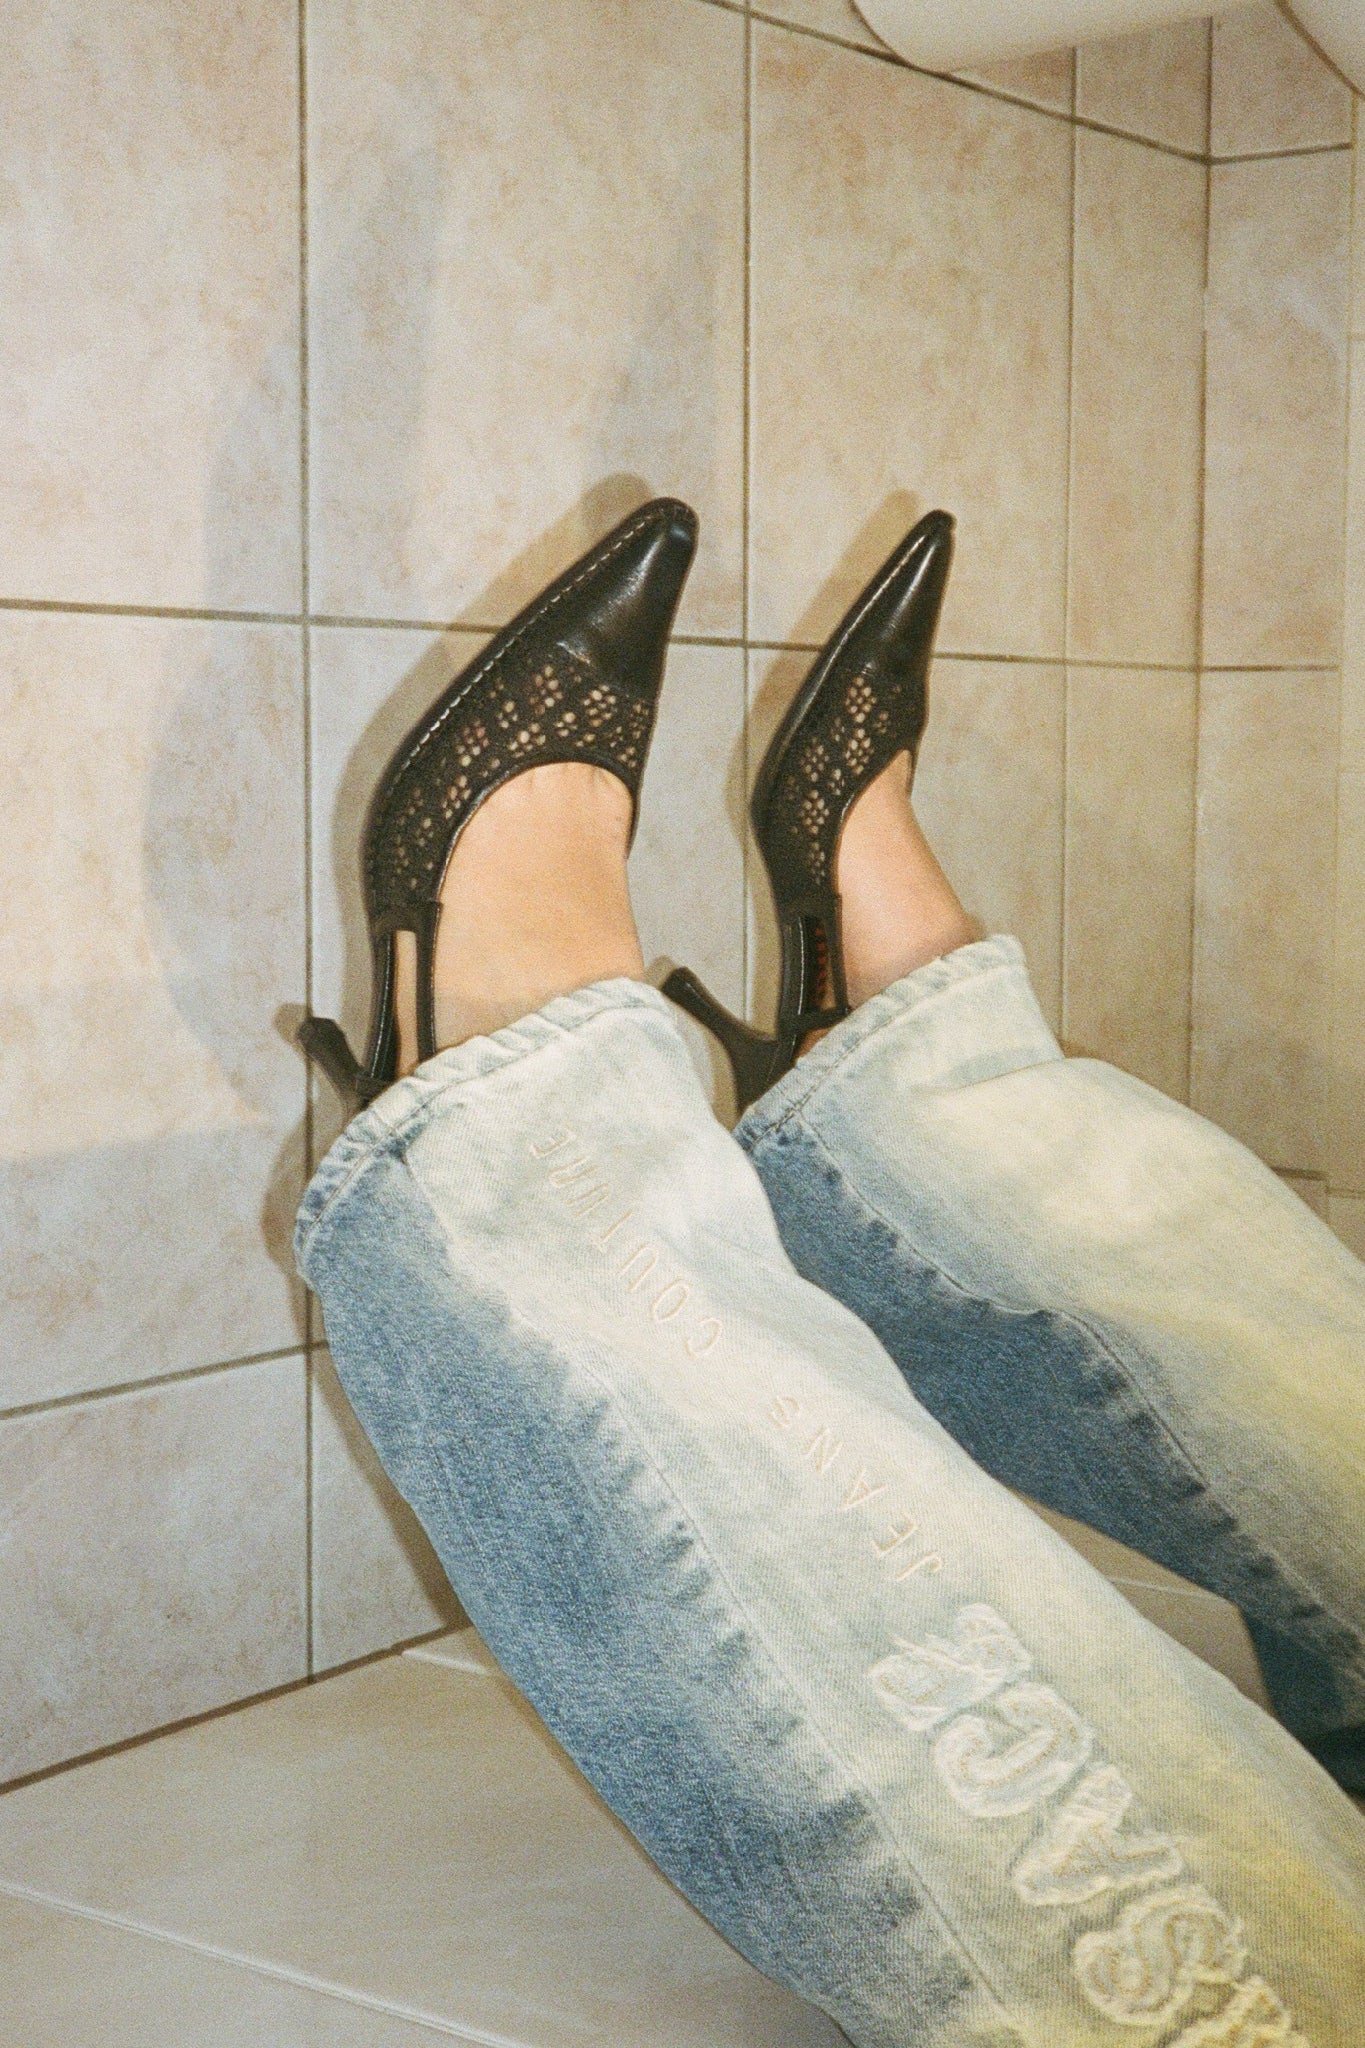 miu miu 2000 00s sling back sandals black versace denim jeans analog fashion photography bathroom vintage pointed heel